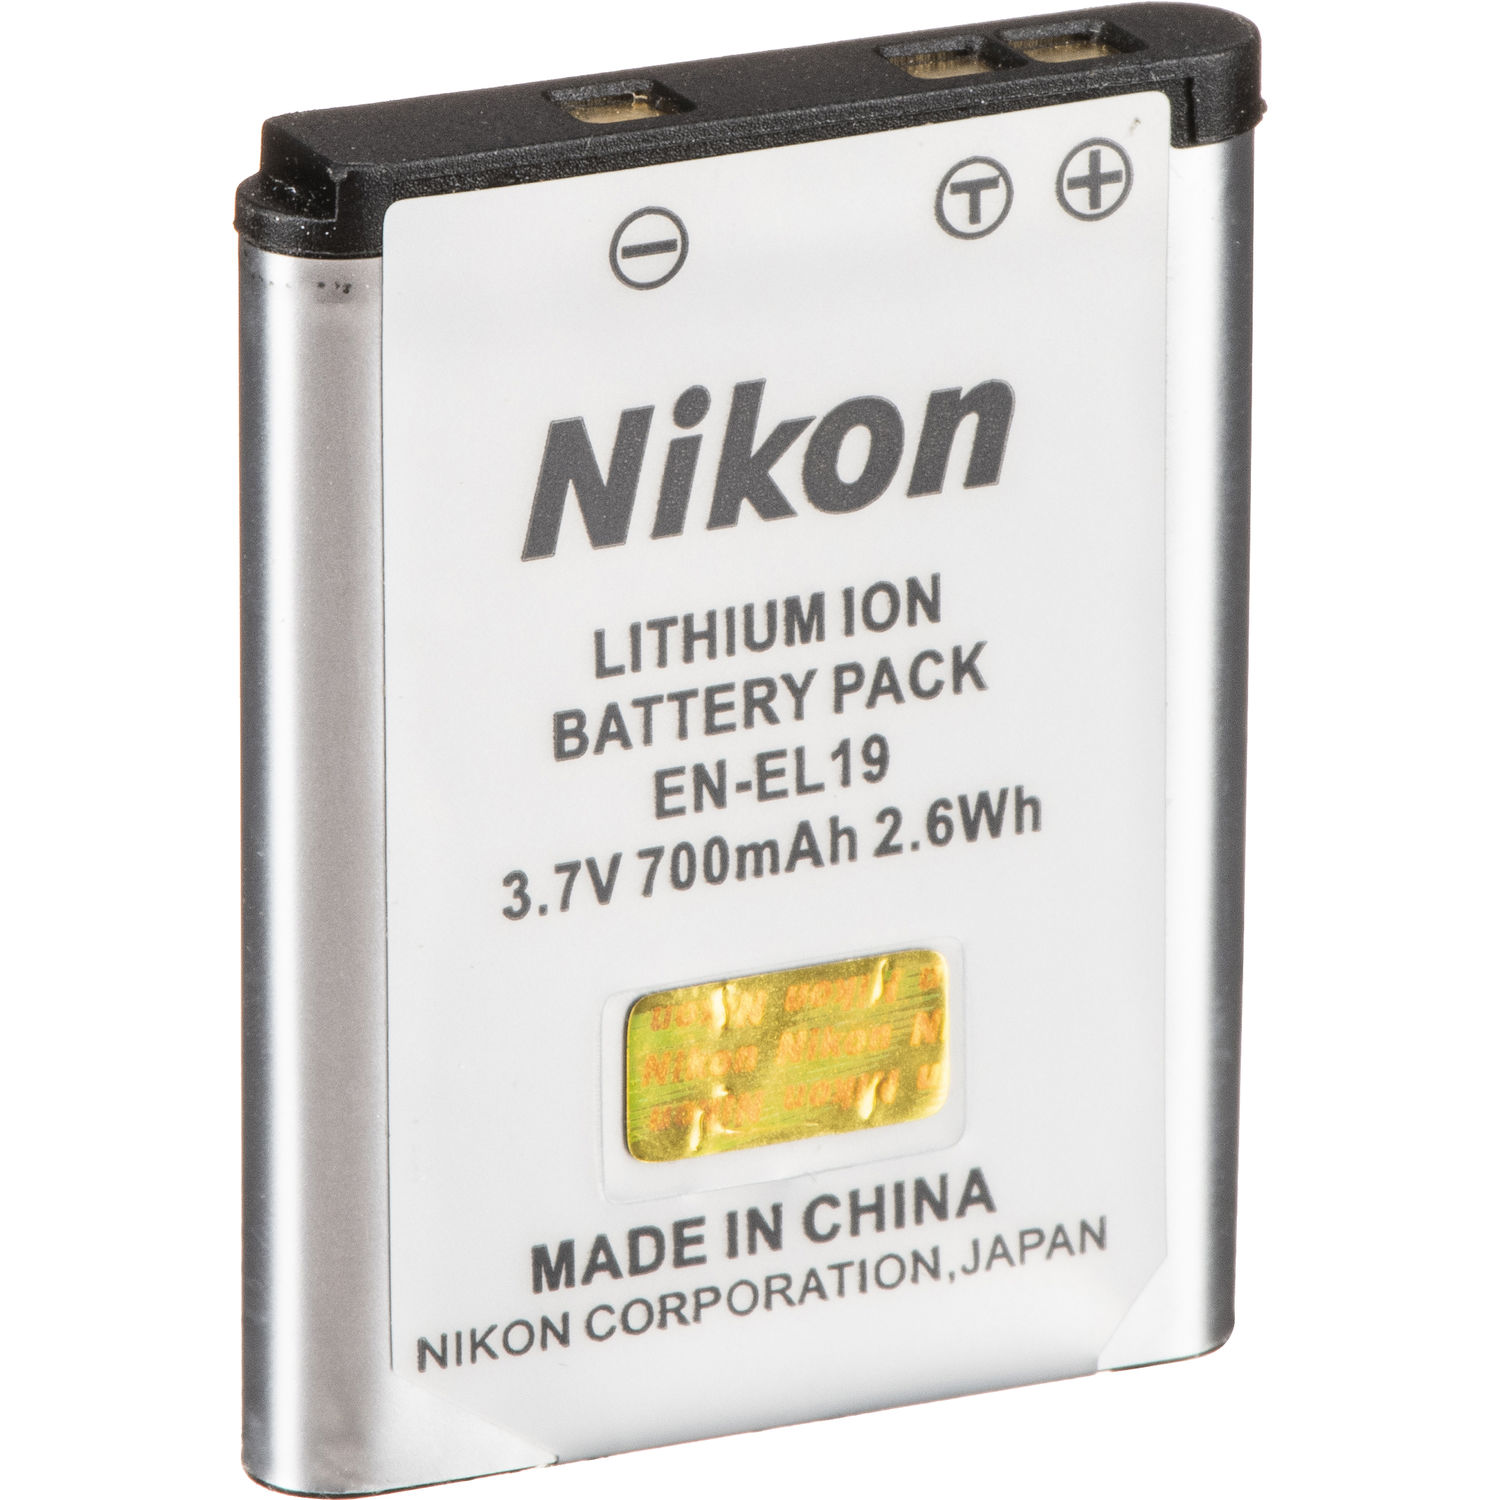 Nikon EN-EL19 Rechargable Battery